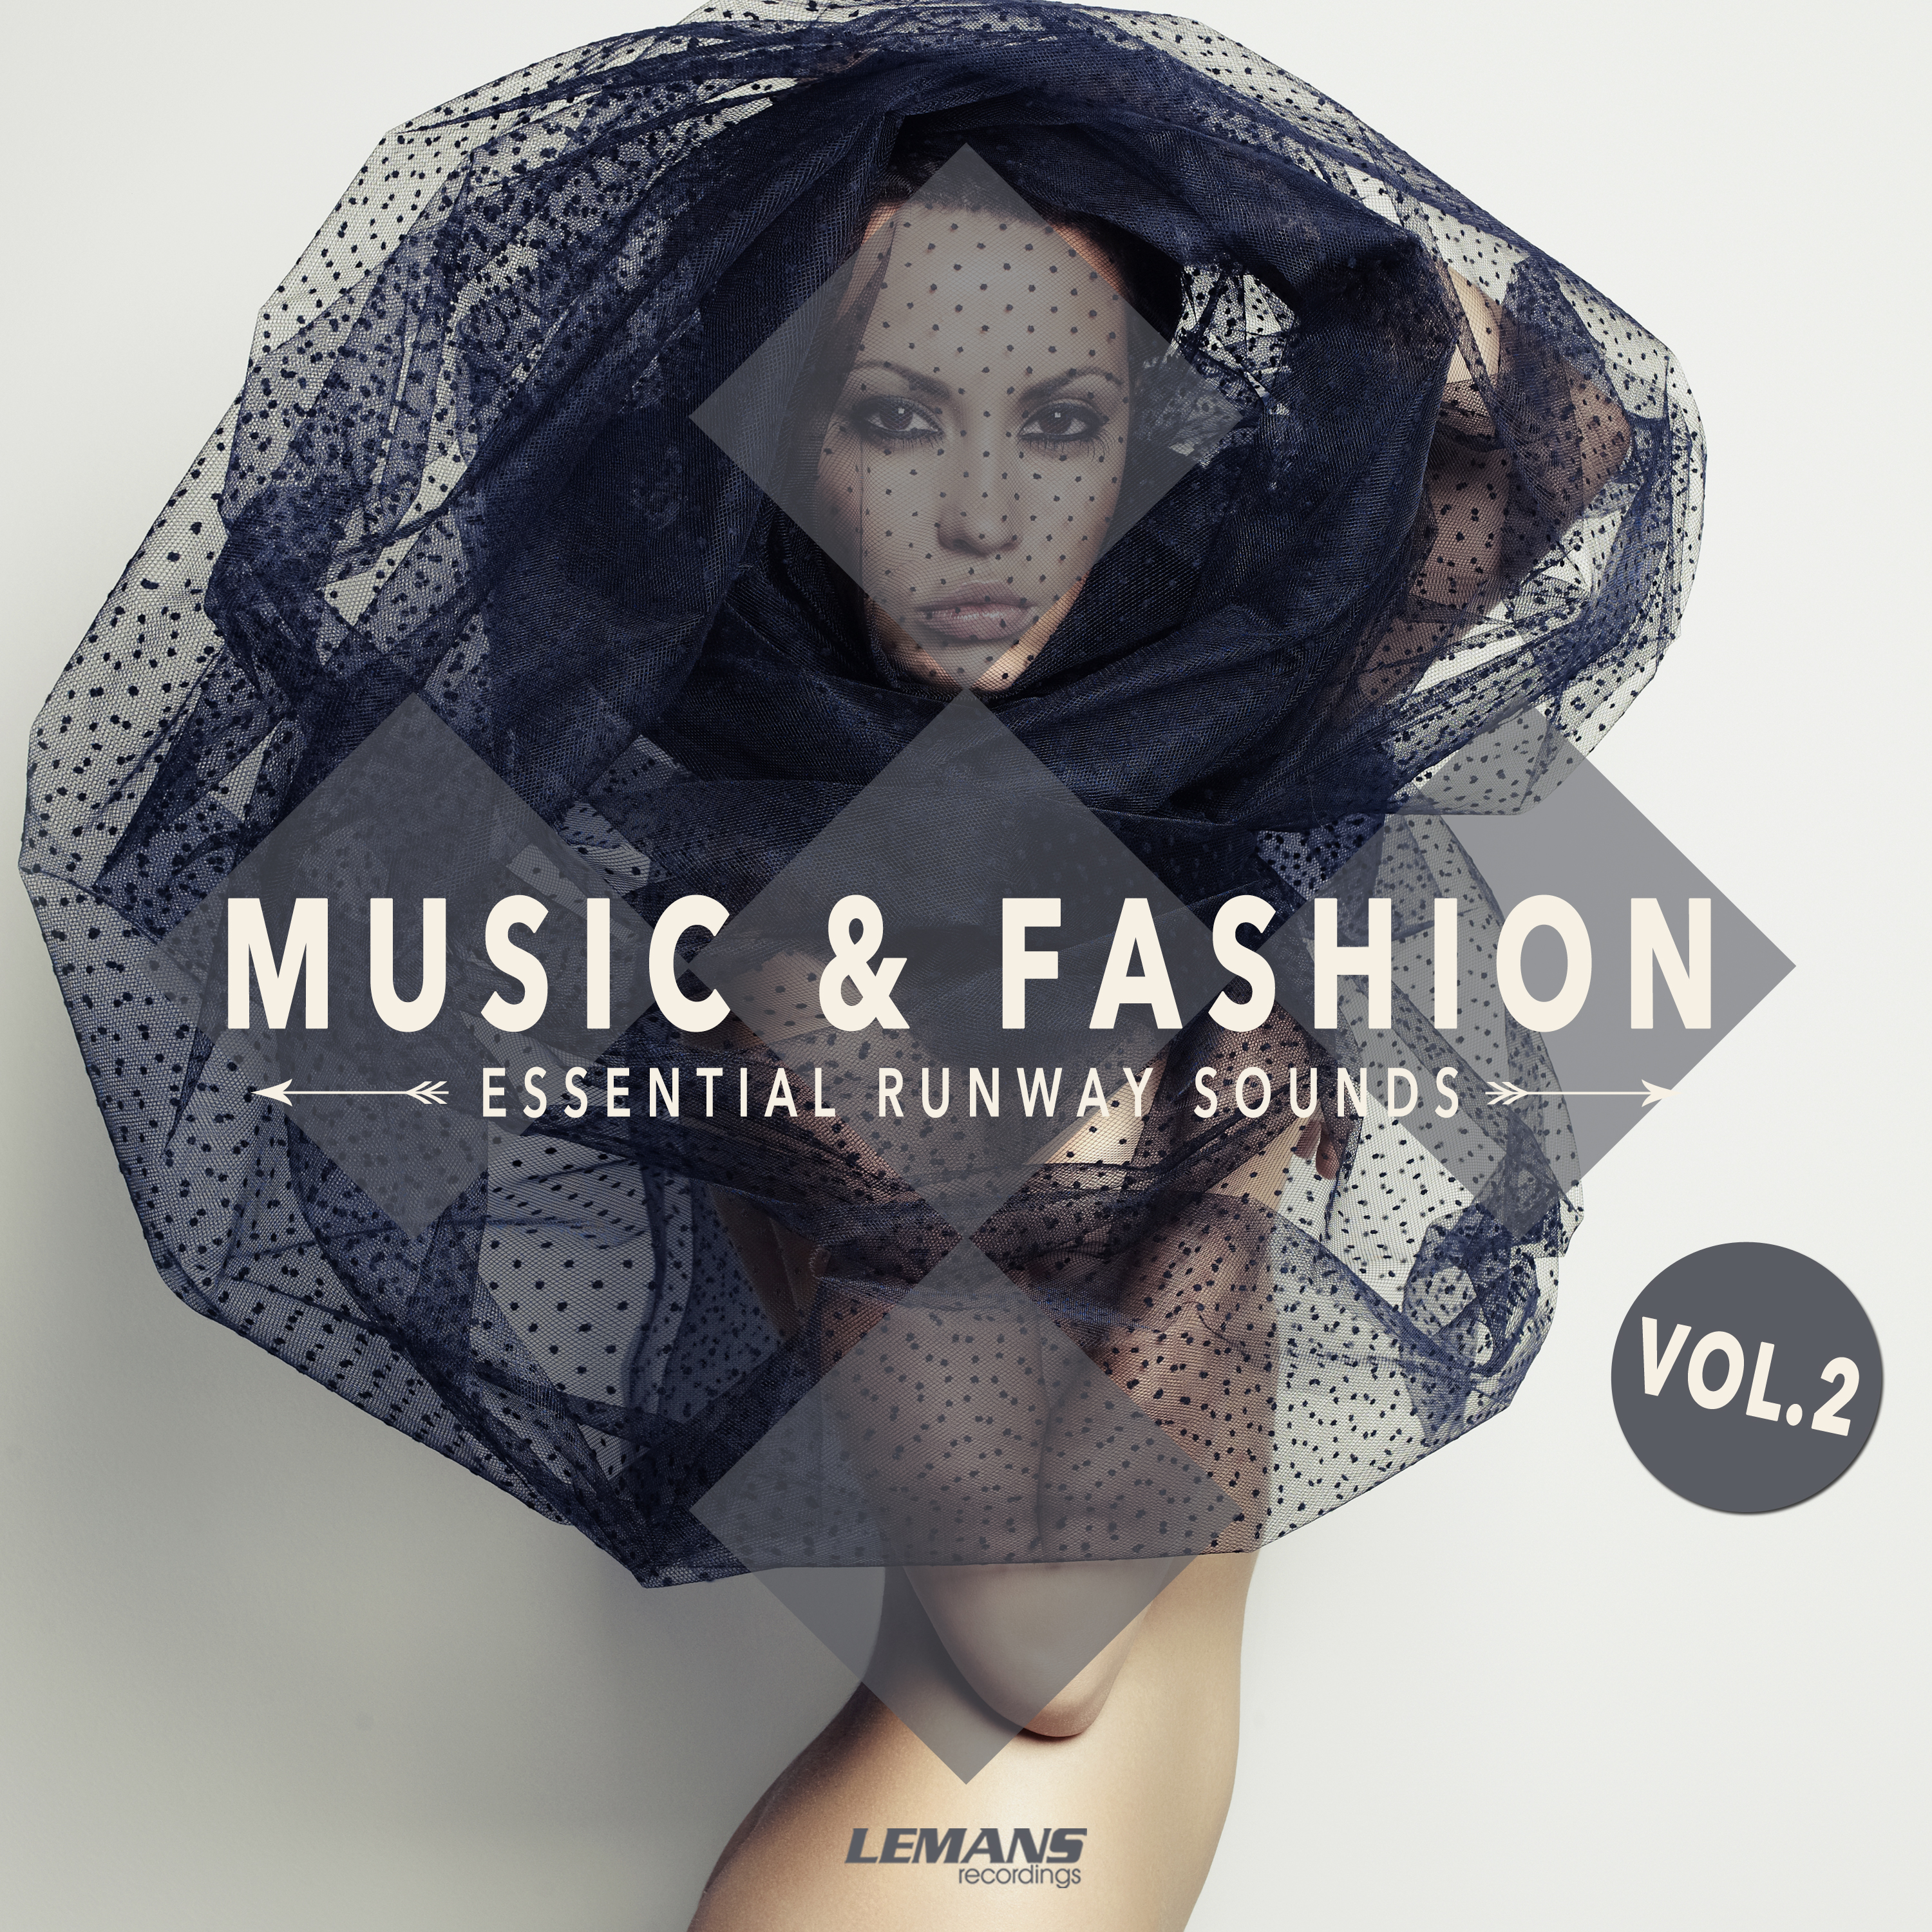 Music & Fashion - Essential Runway Sounds, Vol. 2